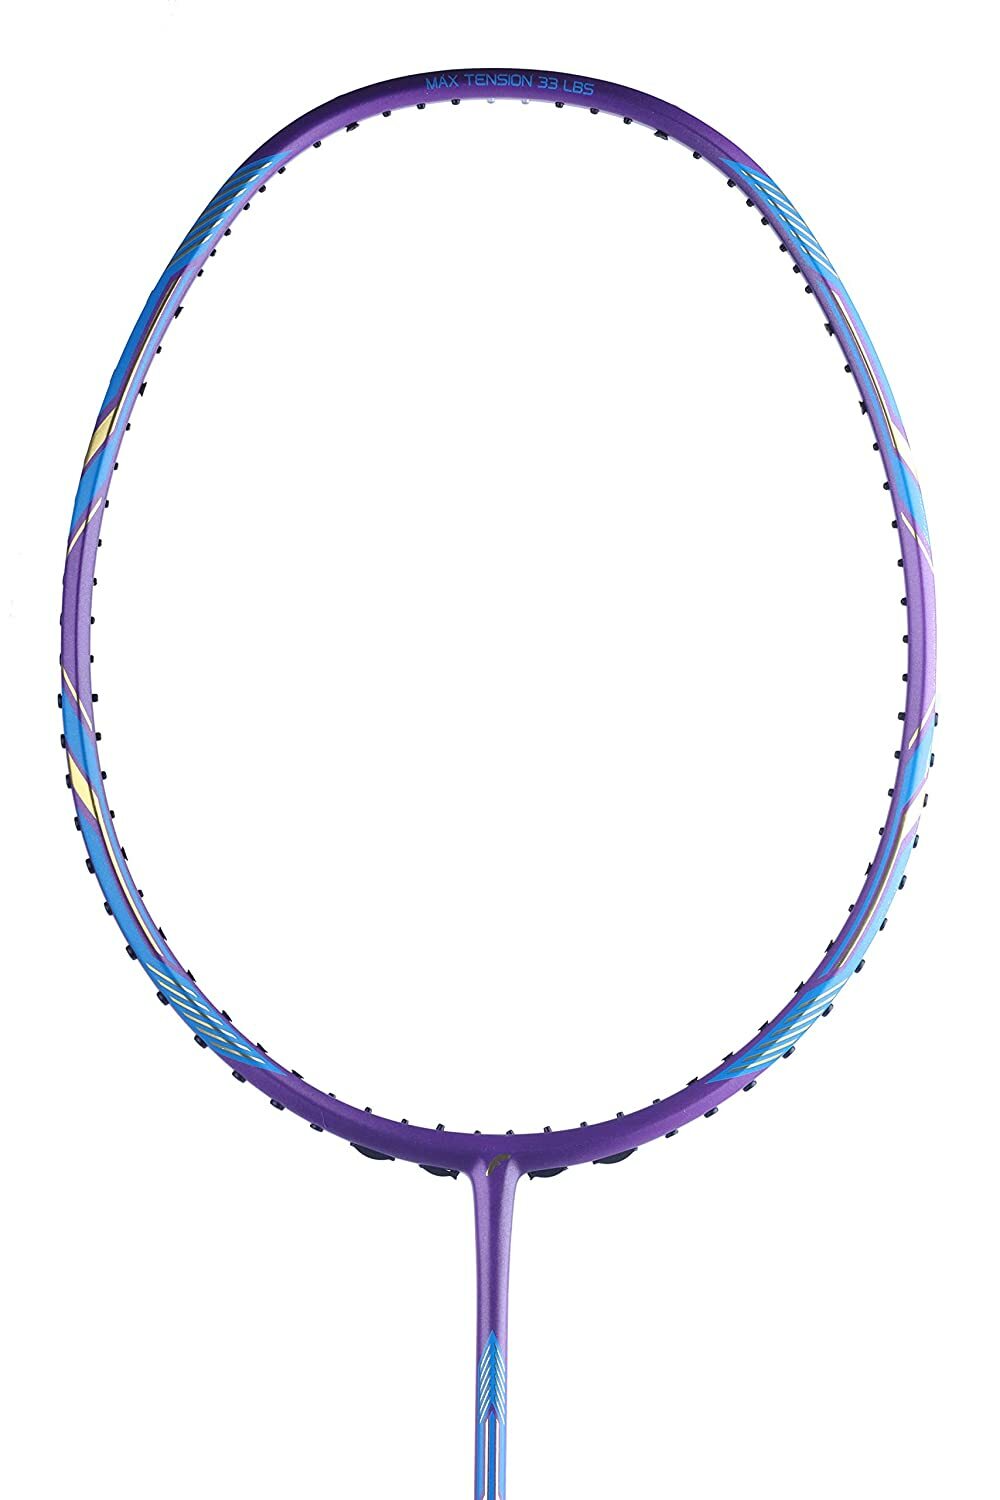 Flex Power Air Speed 10 Mega Tension - 33LBS Full Graphite Badminton Racquet with Full Racket Cover Purple/Neon